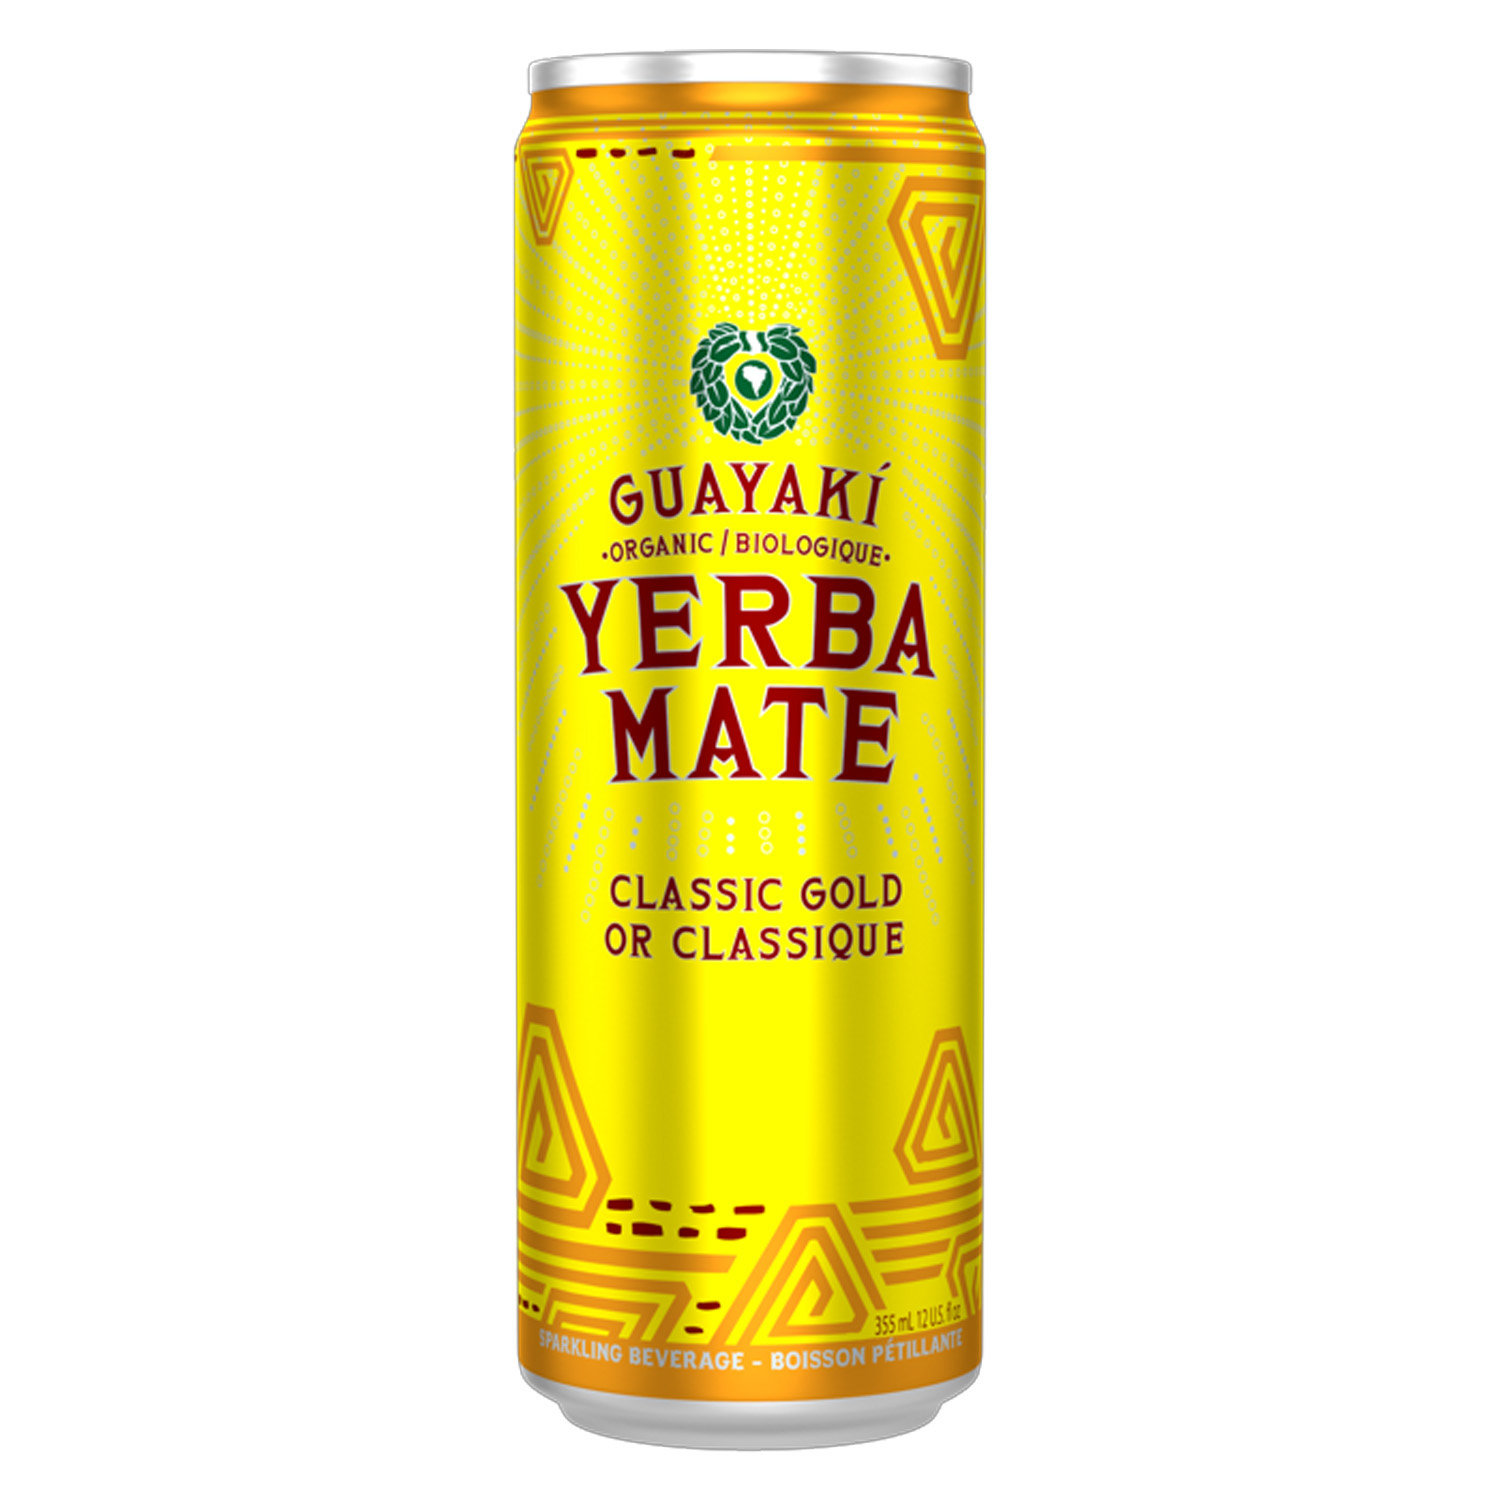 Save on Guayaki Yerba Mate Enlighten Mint Organic Order Online